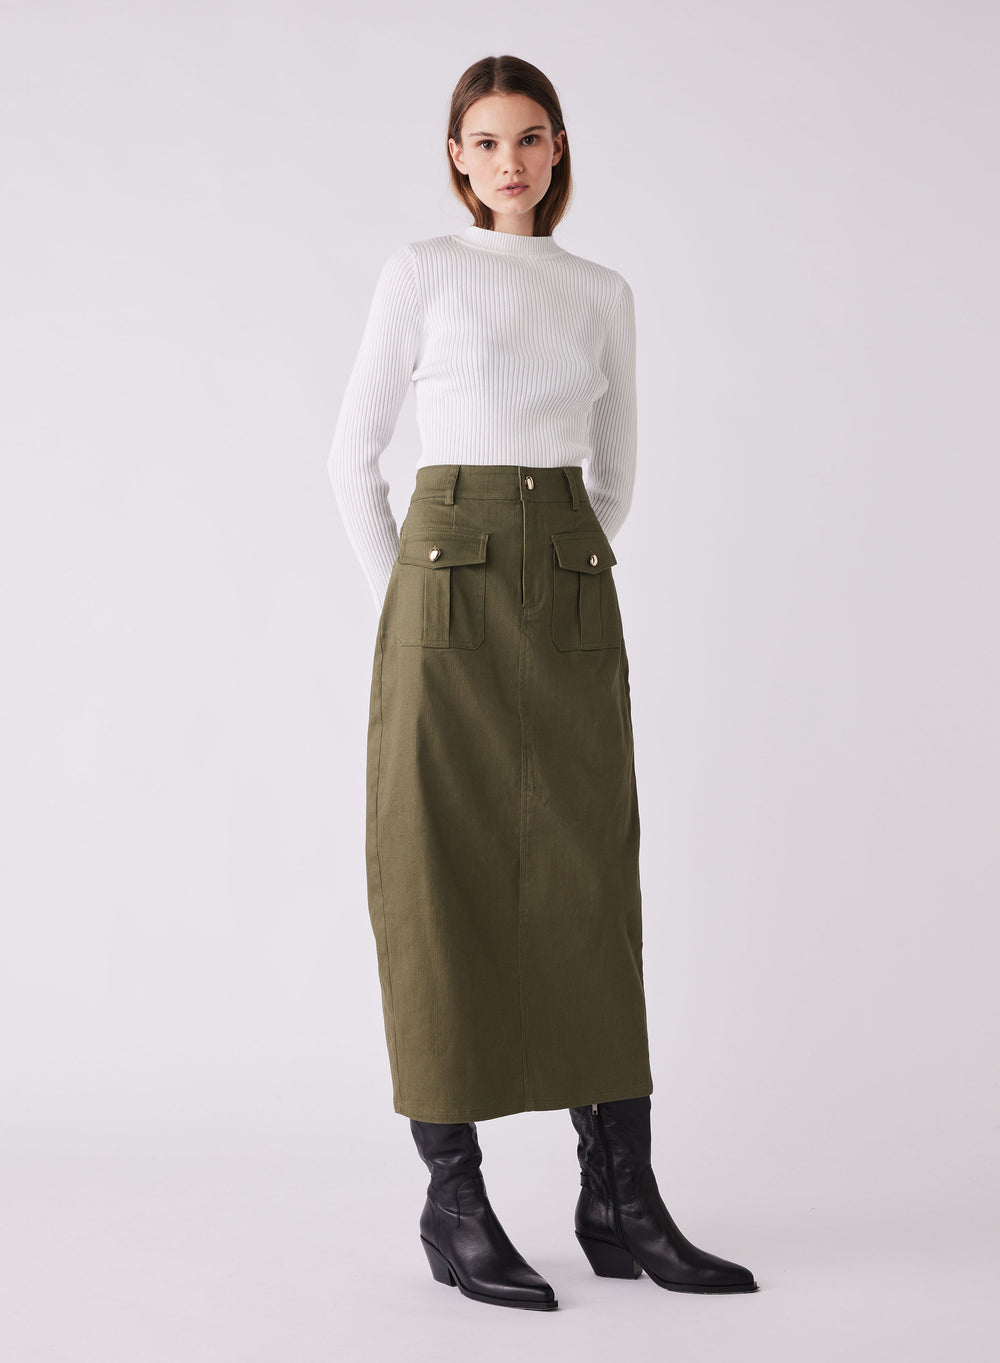 ESMAEÉ - Uptown Skirt